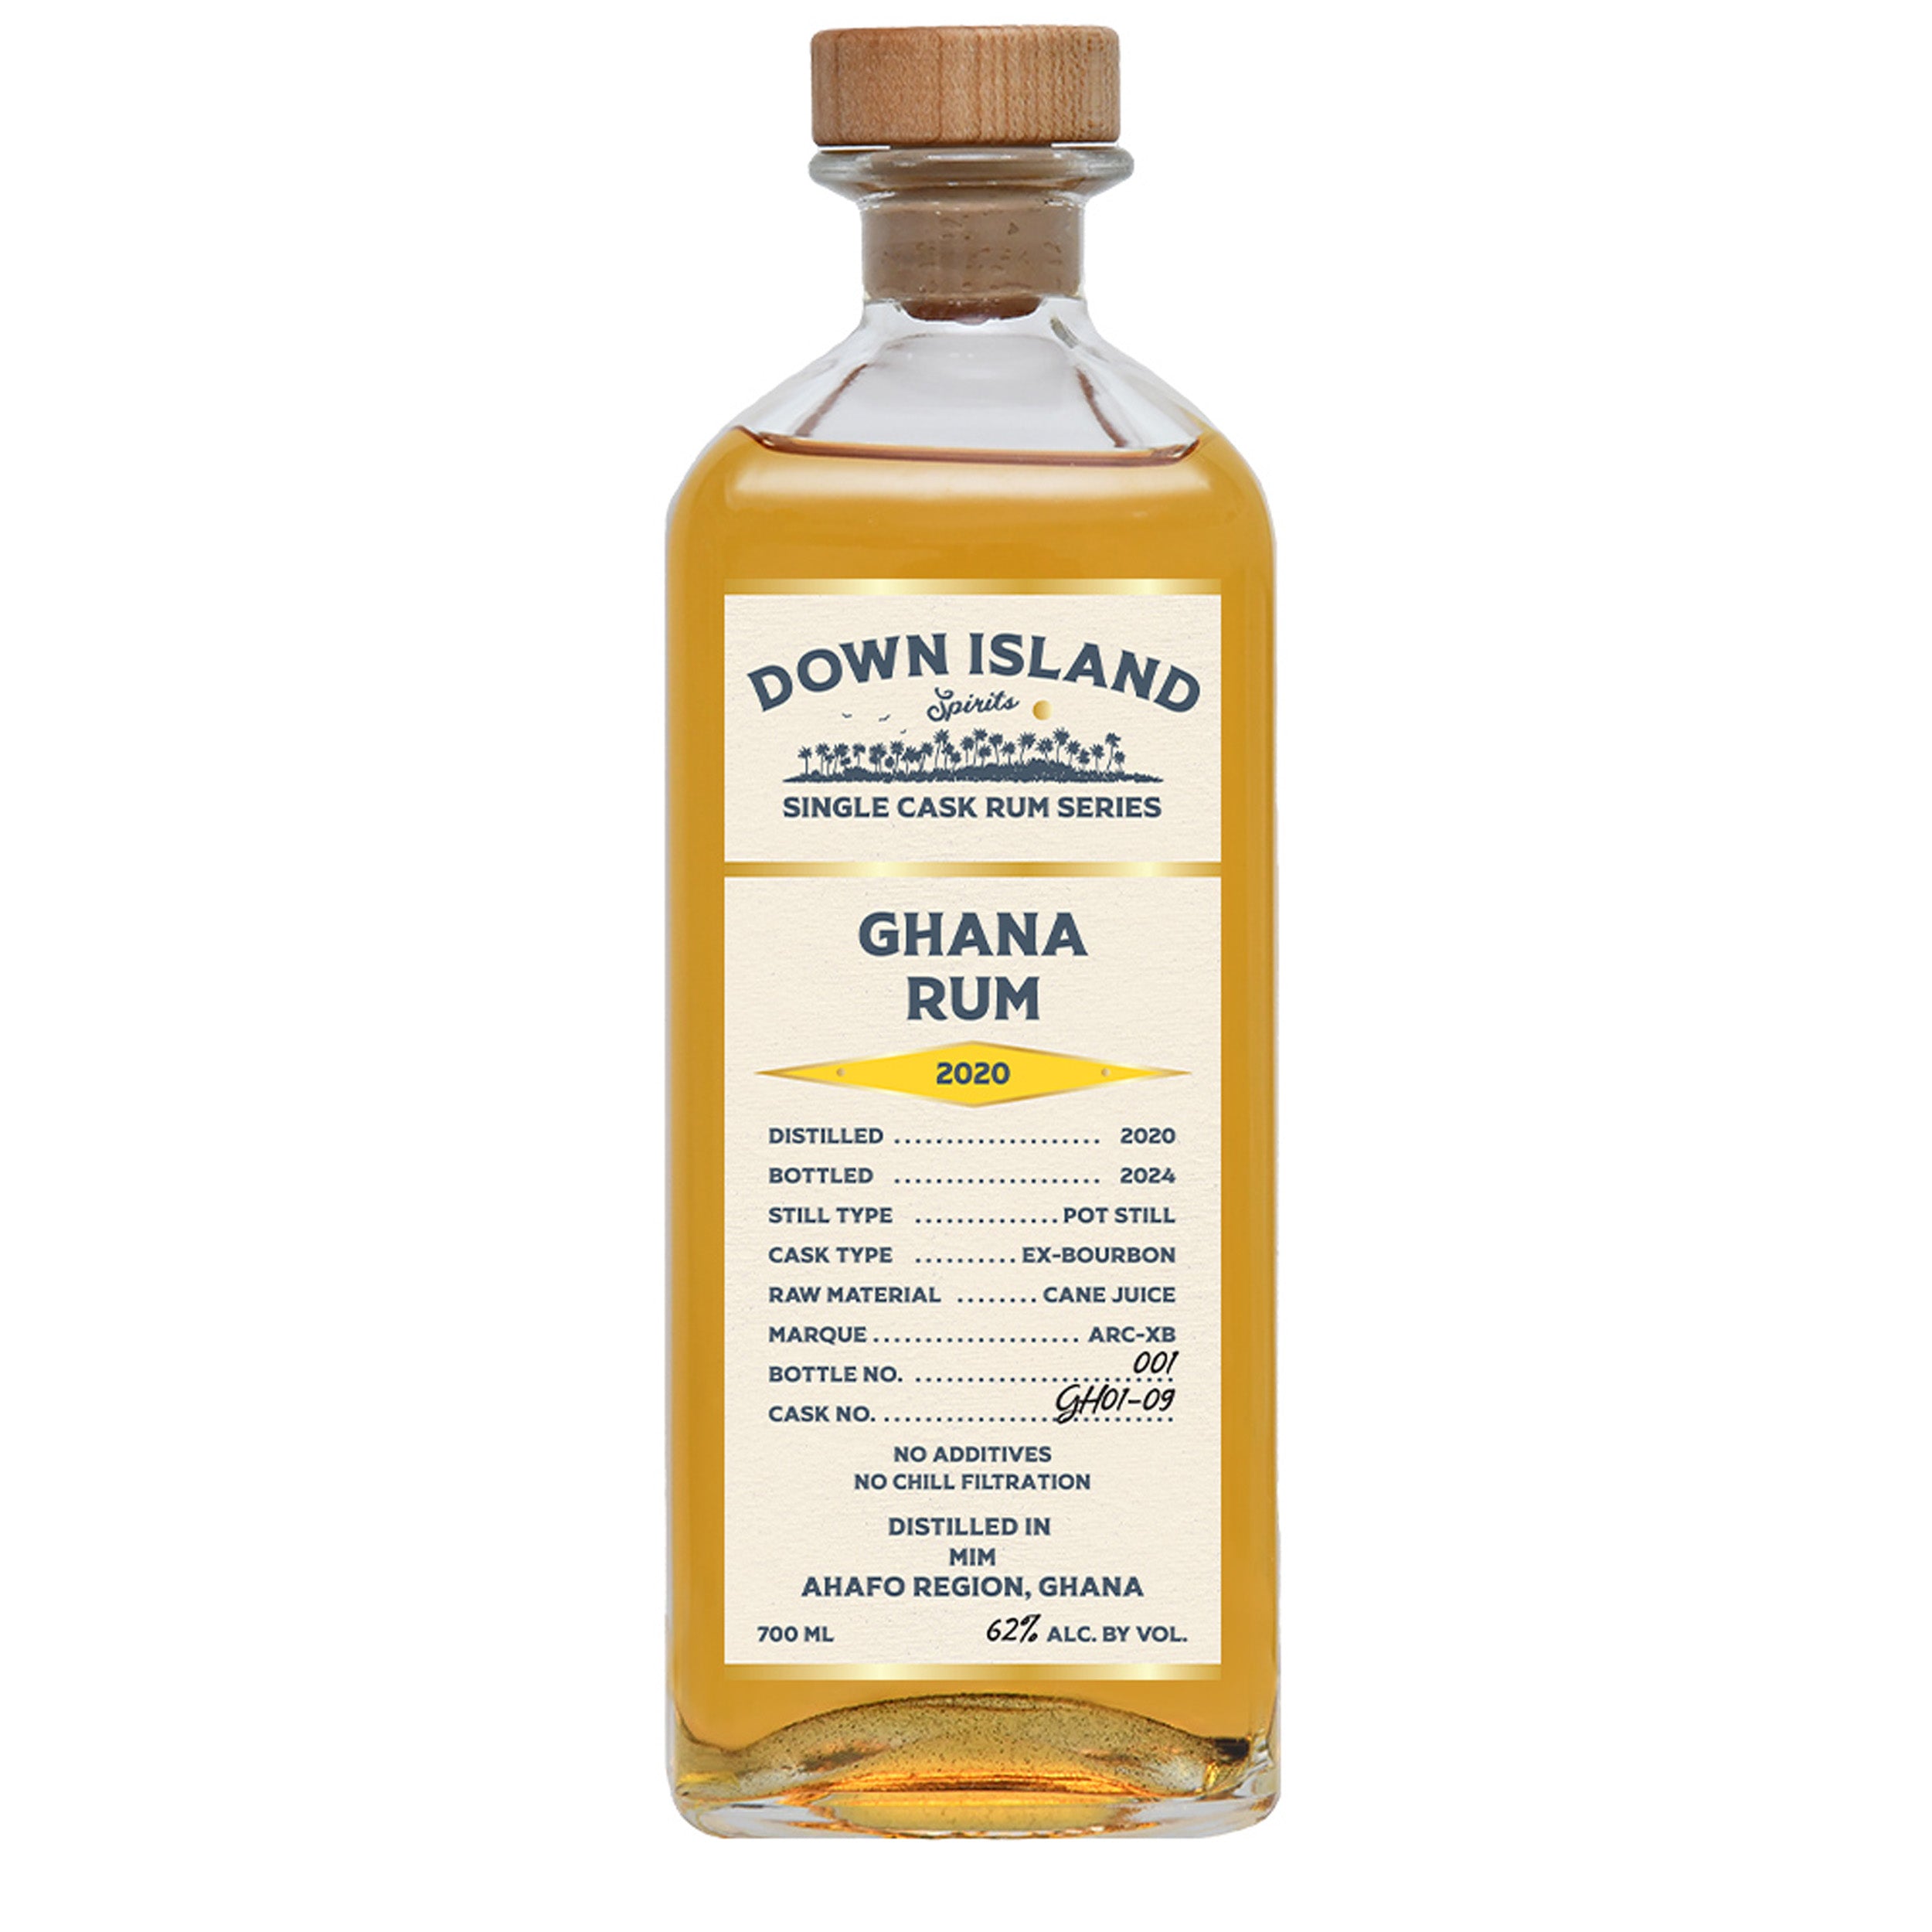 Down Island Ghana 2020 Rum